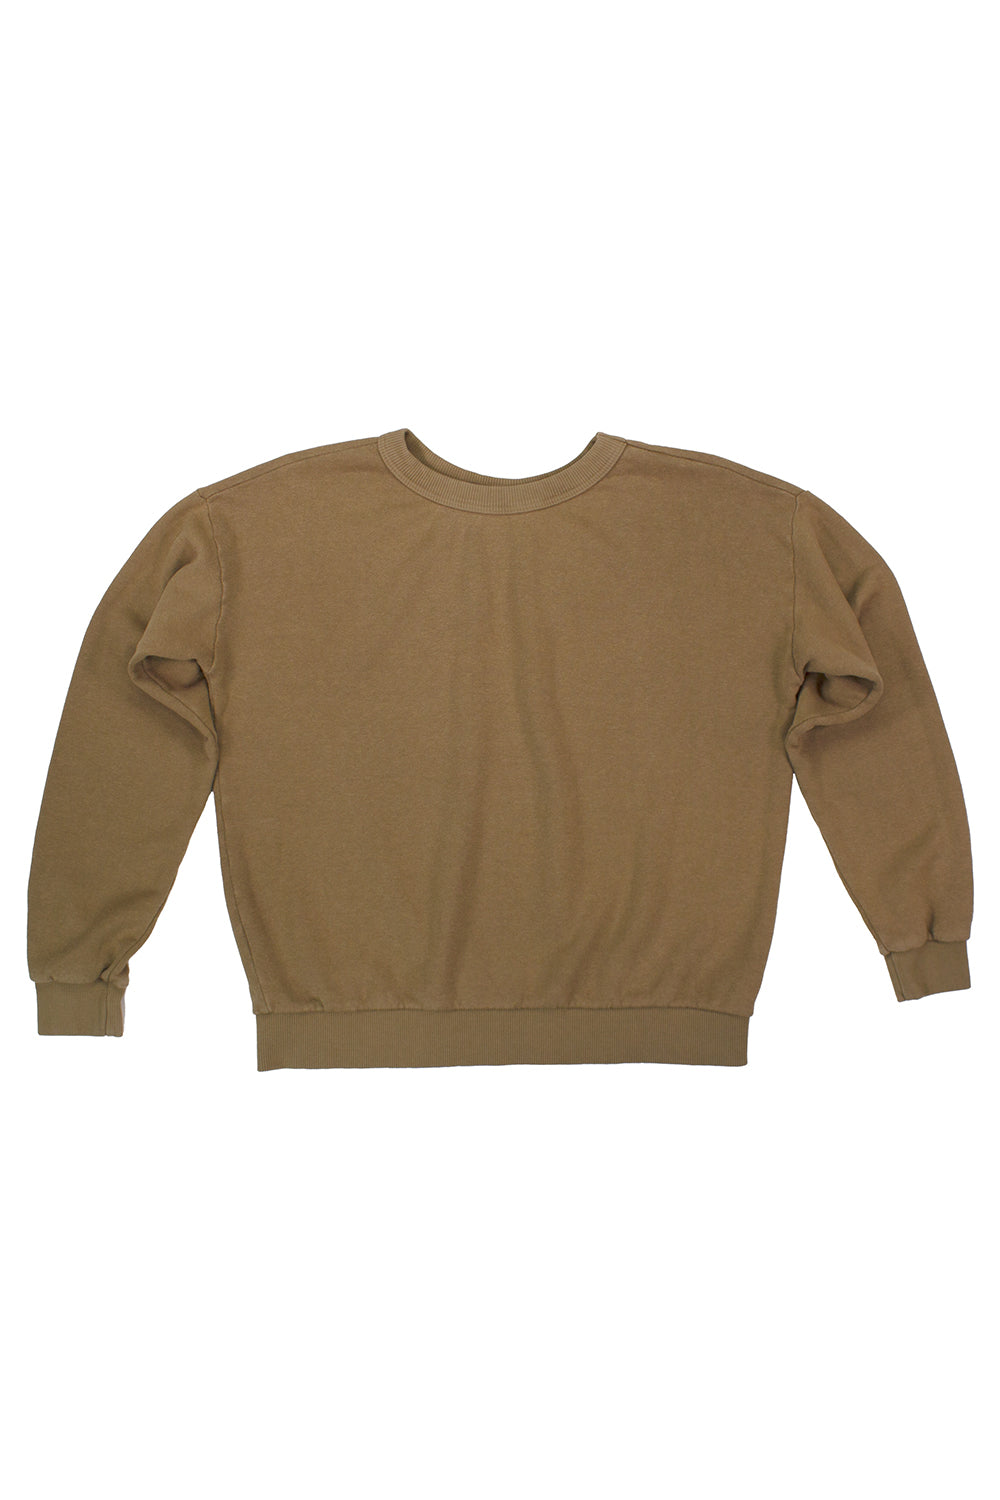 Laguna Cropped Sweatshirt | Jungmaven Hemp Clothing & Accessories / Color: Coyote